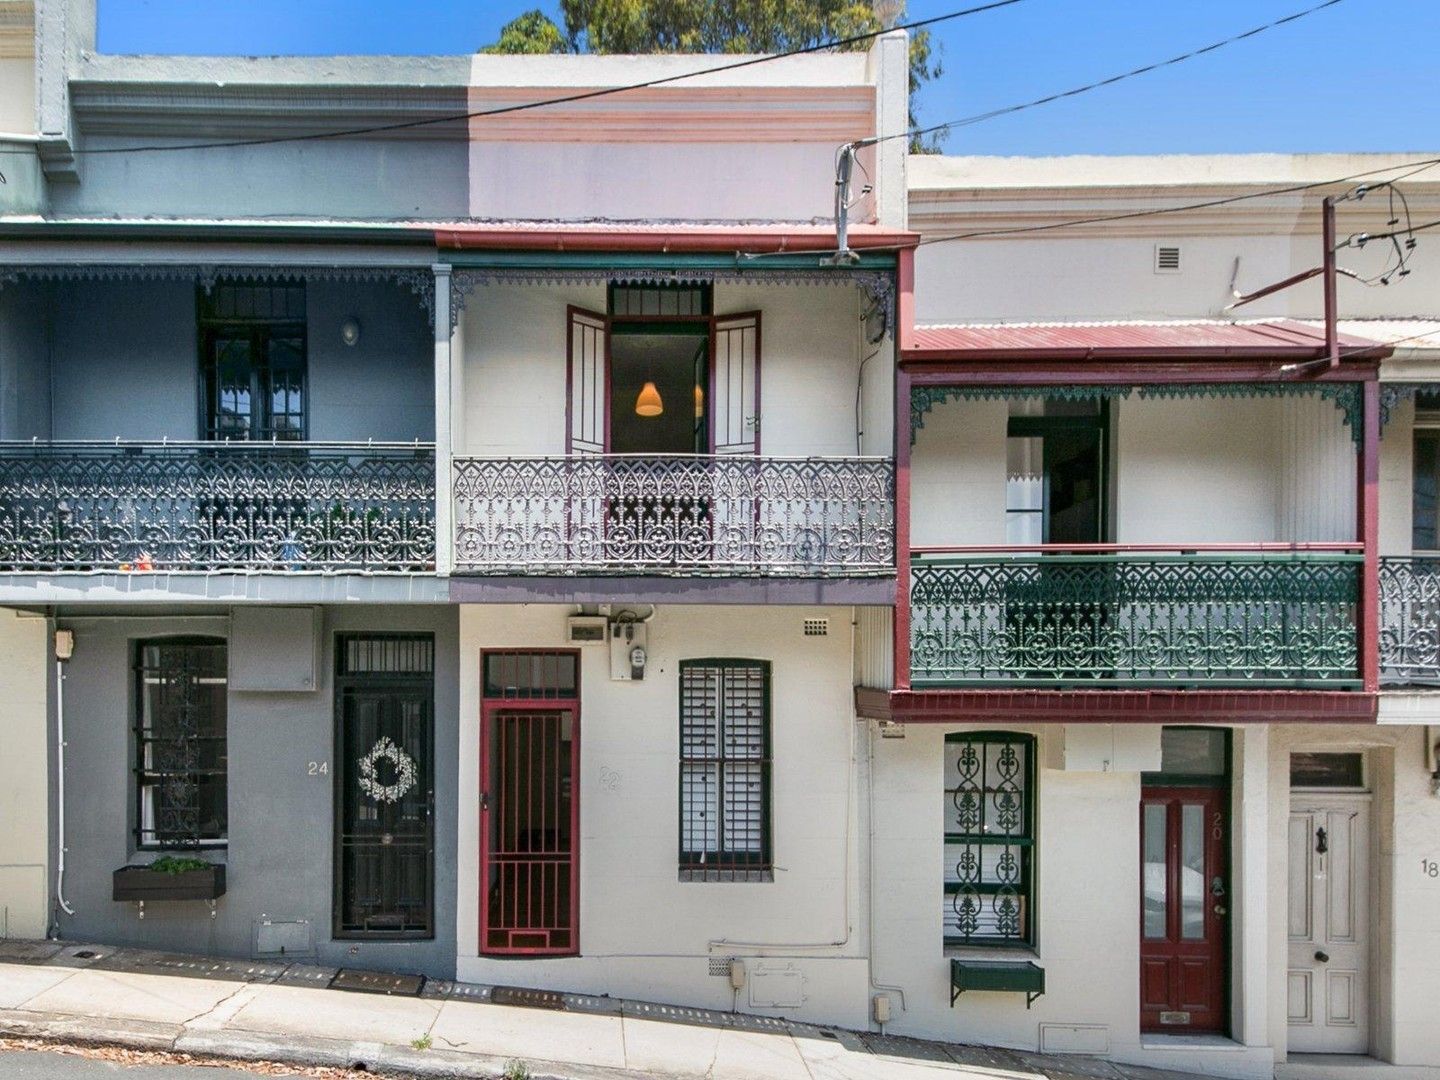 2 bedrooms House in 22 Gordon Street RANDWICK NSW, 2031